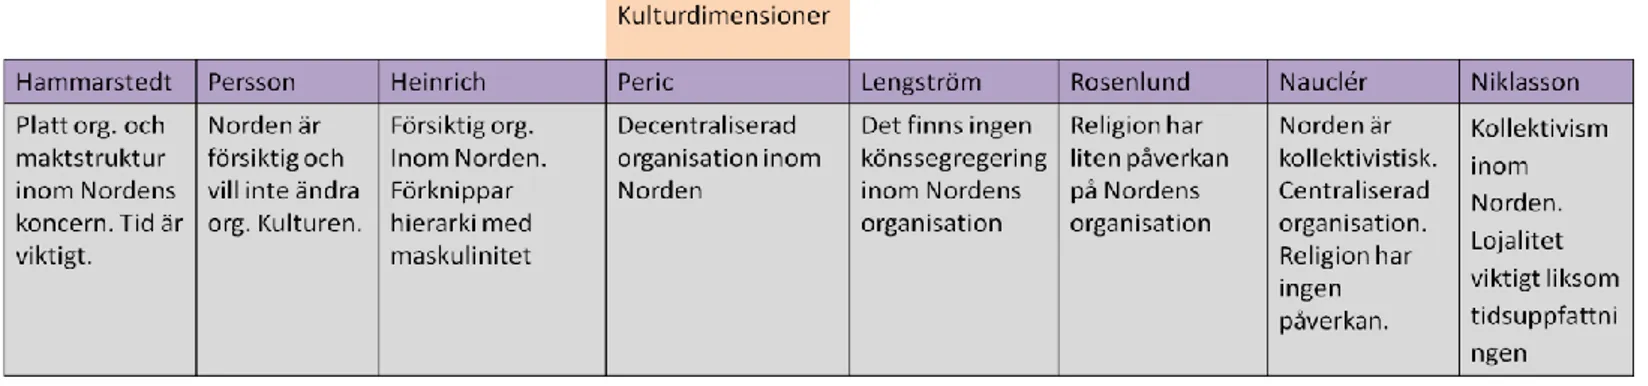 Figur 2 Respondent tabell Kulturdimensioner 